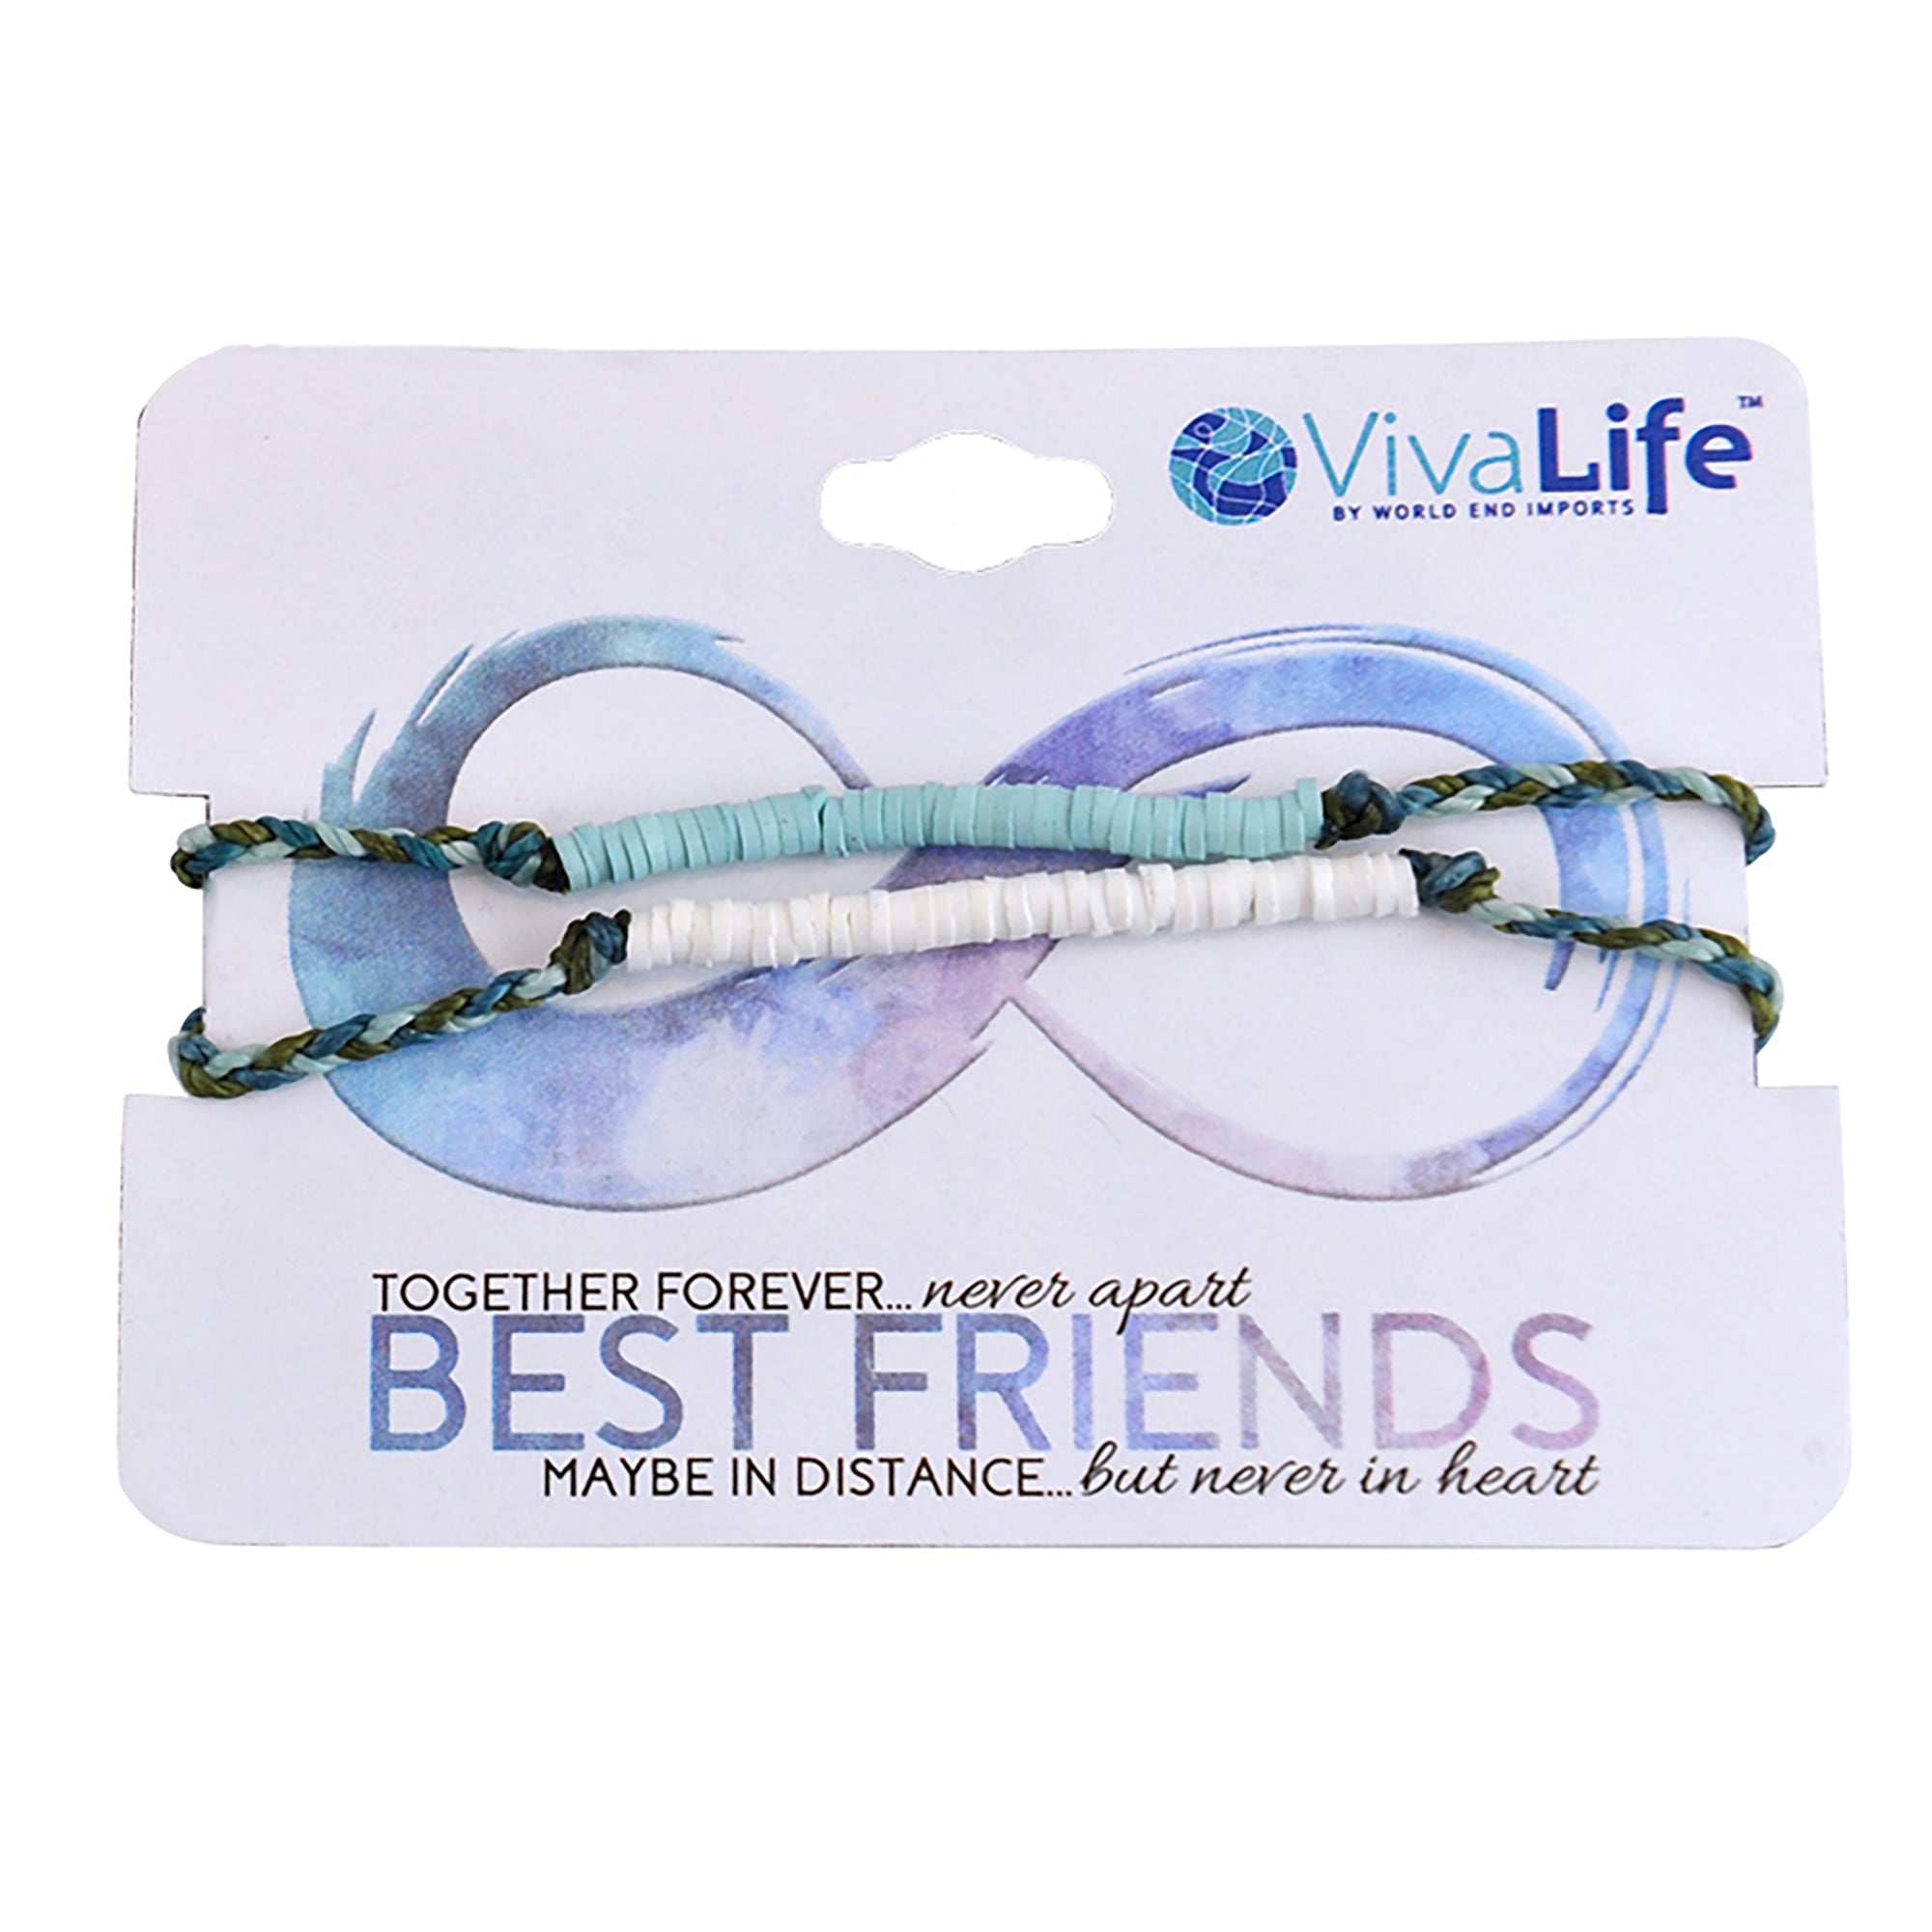 "Best Friends" Fimo Bracelet - Viva life Jewellery